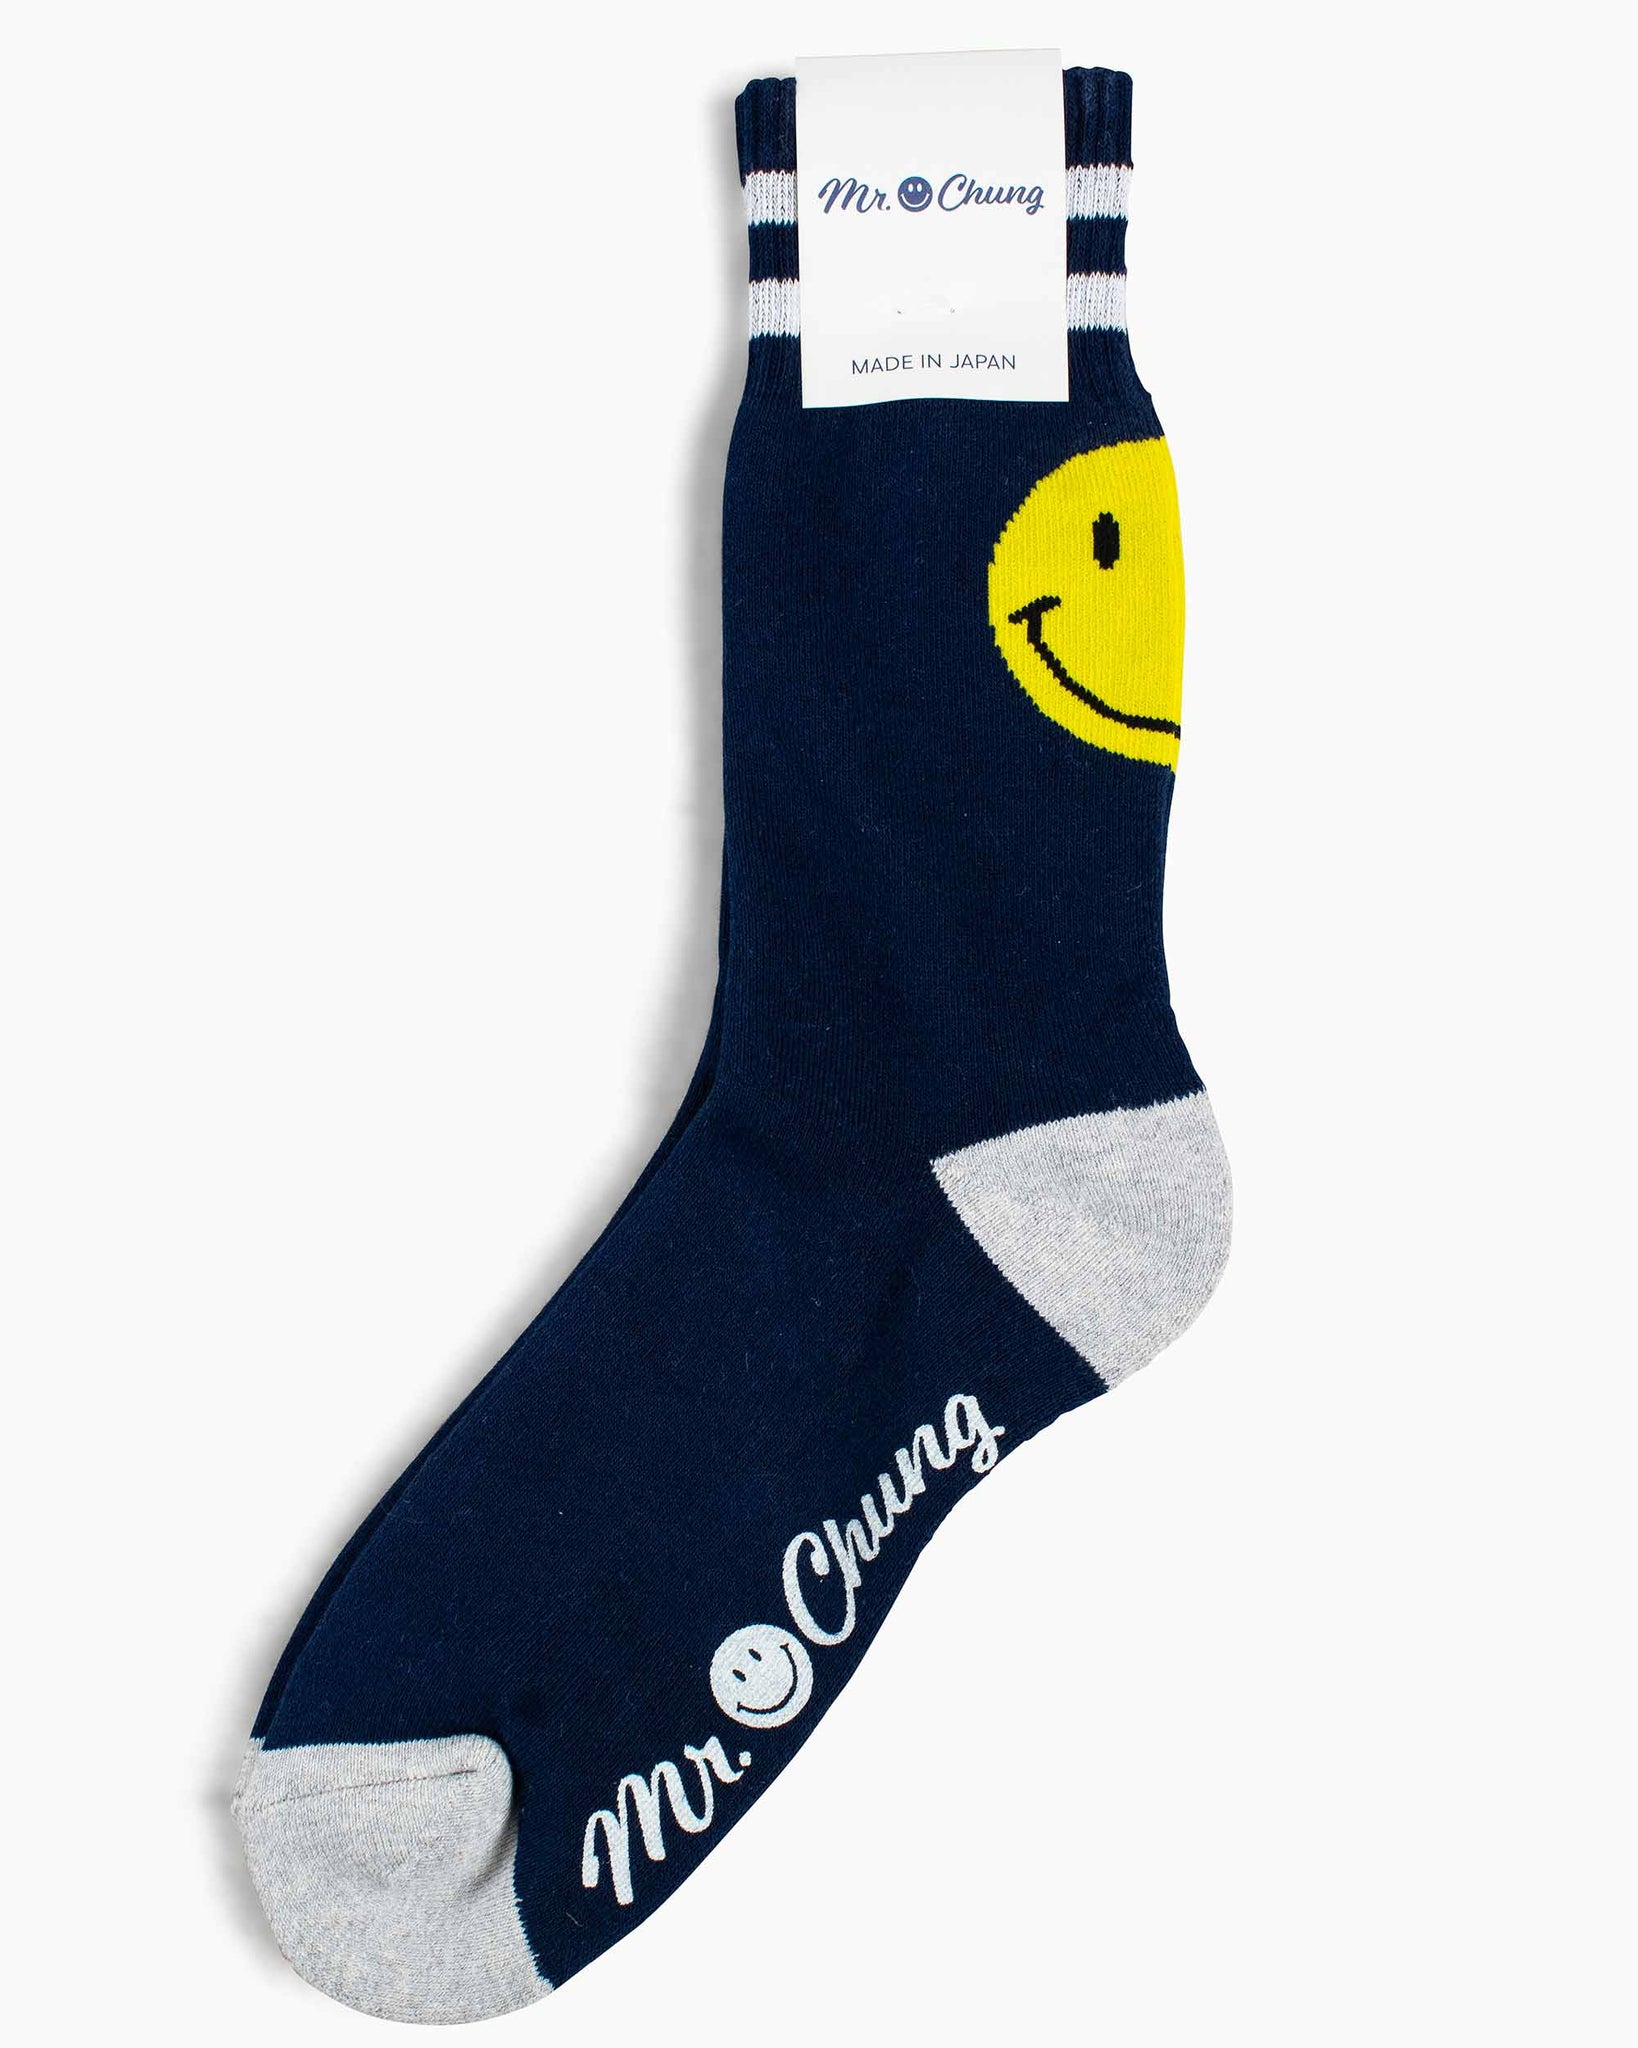 Mr. Chung Smiley Socks Navy/Off White Stripe